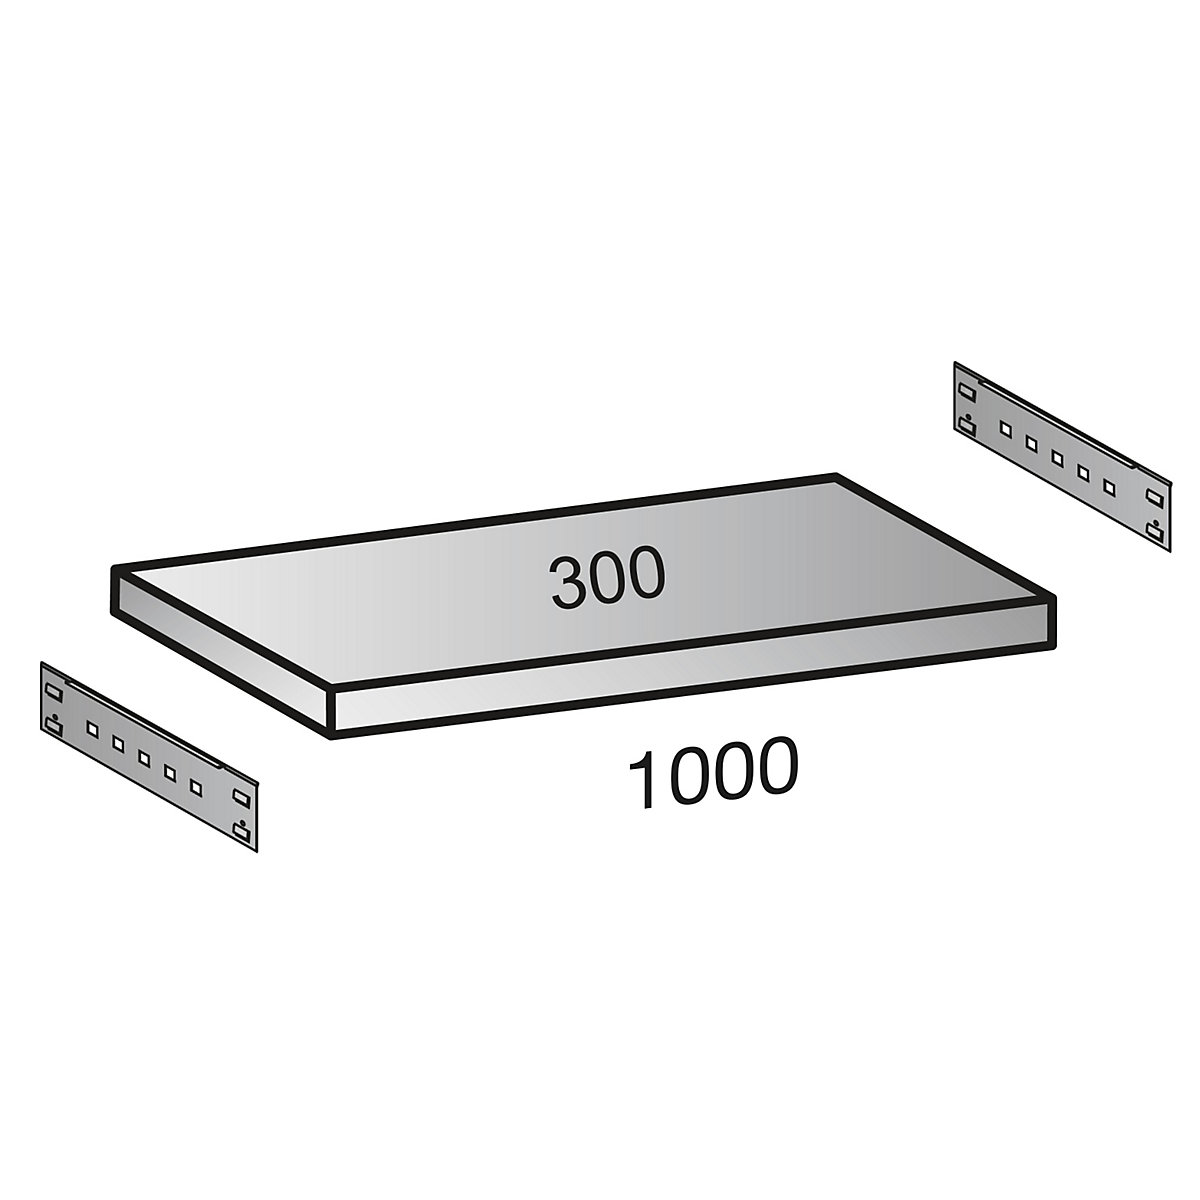 Shelf for industrial boltless shelf unit, shelf width 1000 mm, depth 300 mm